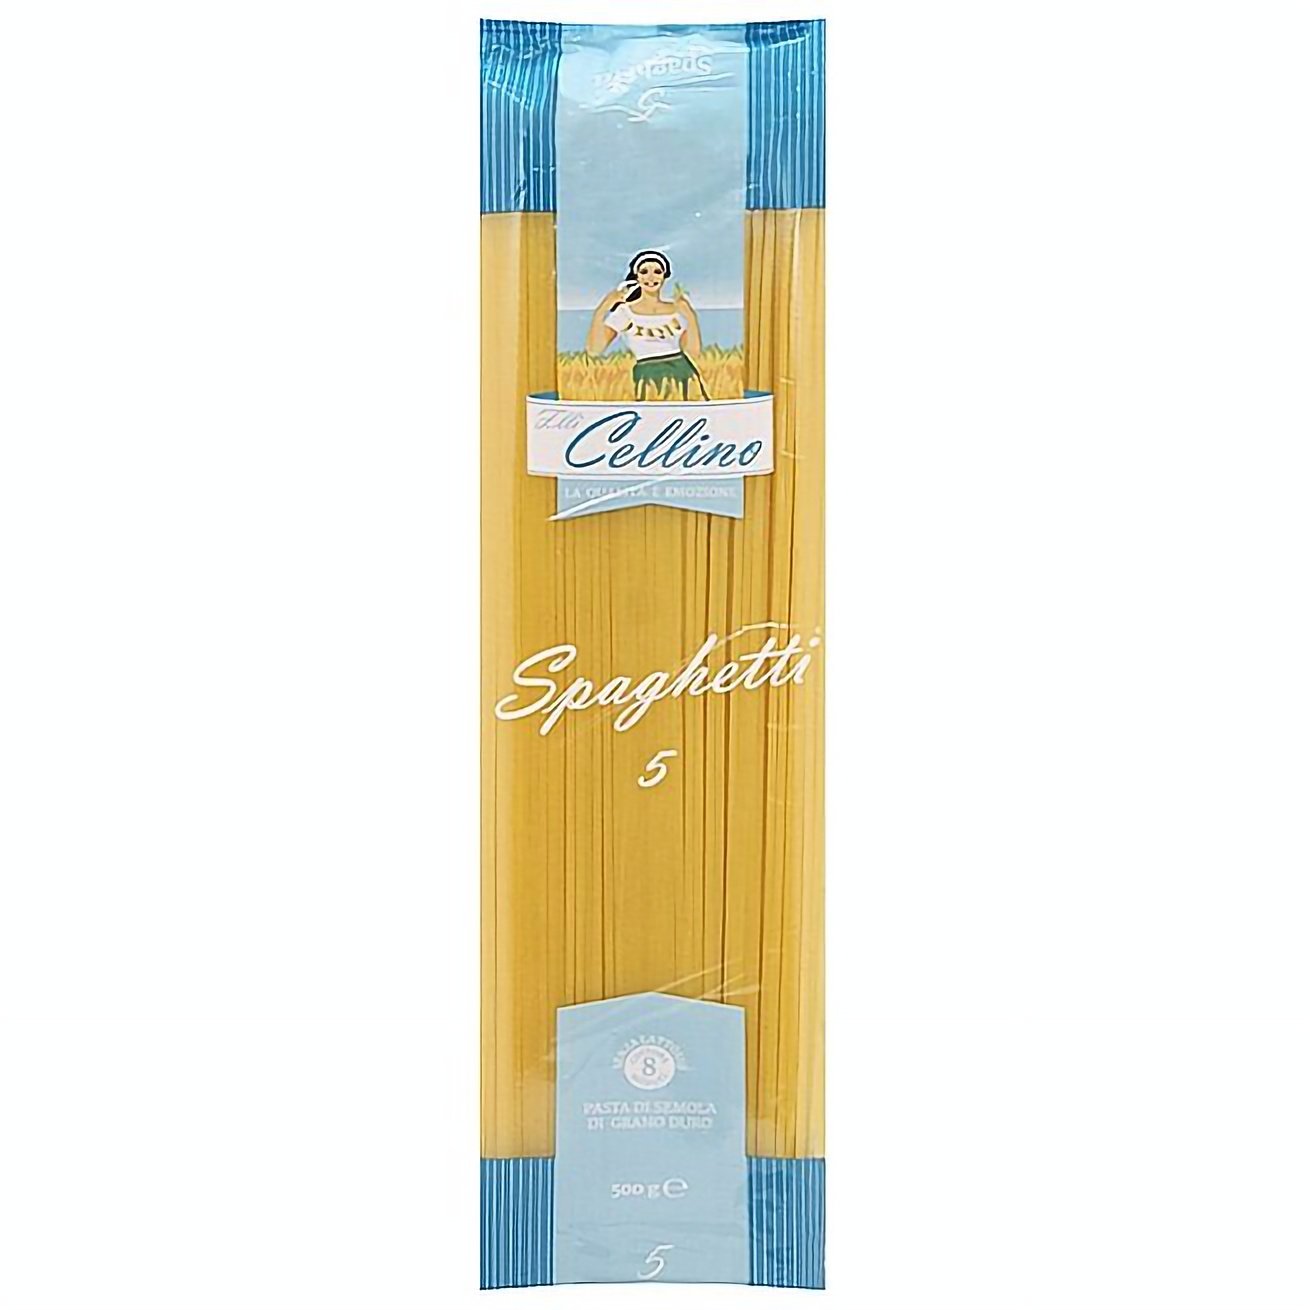 Макаронные изделия Cellino Spaghetti N.5 500 г - фото 1